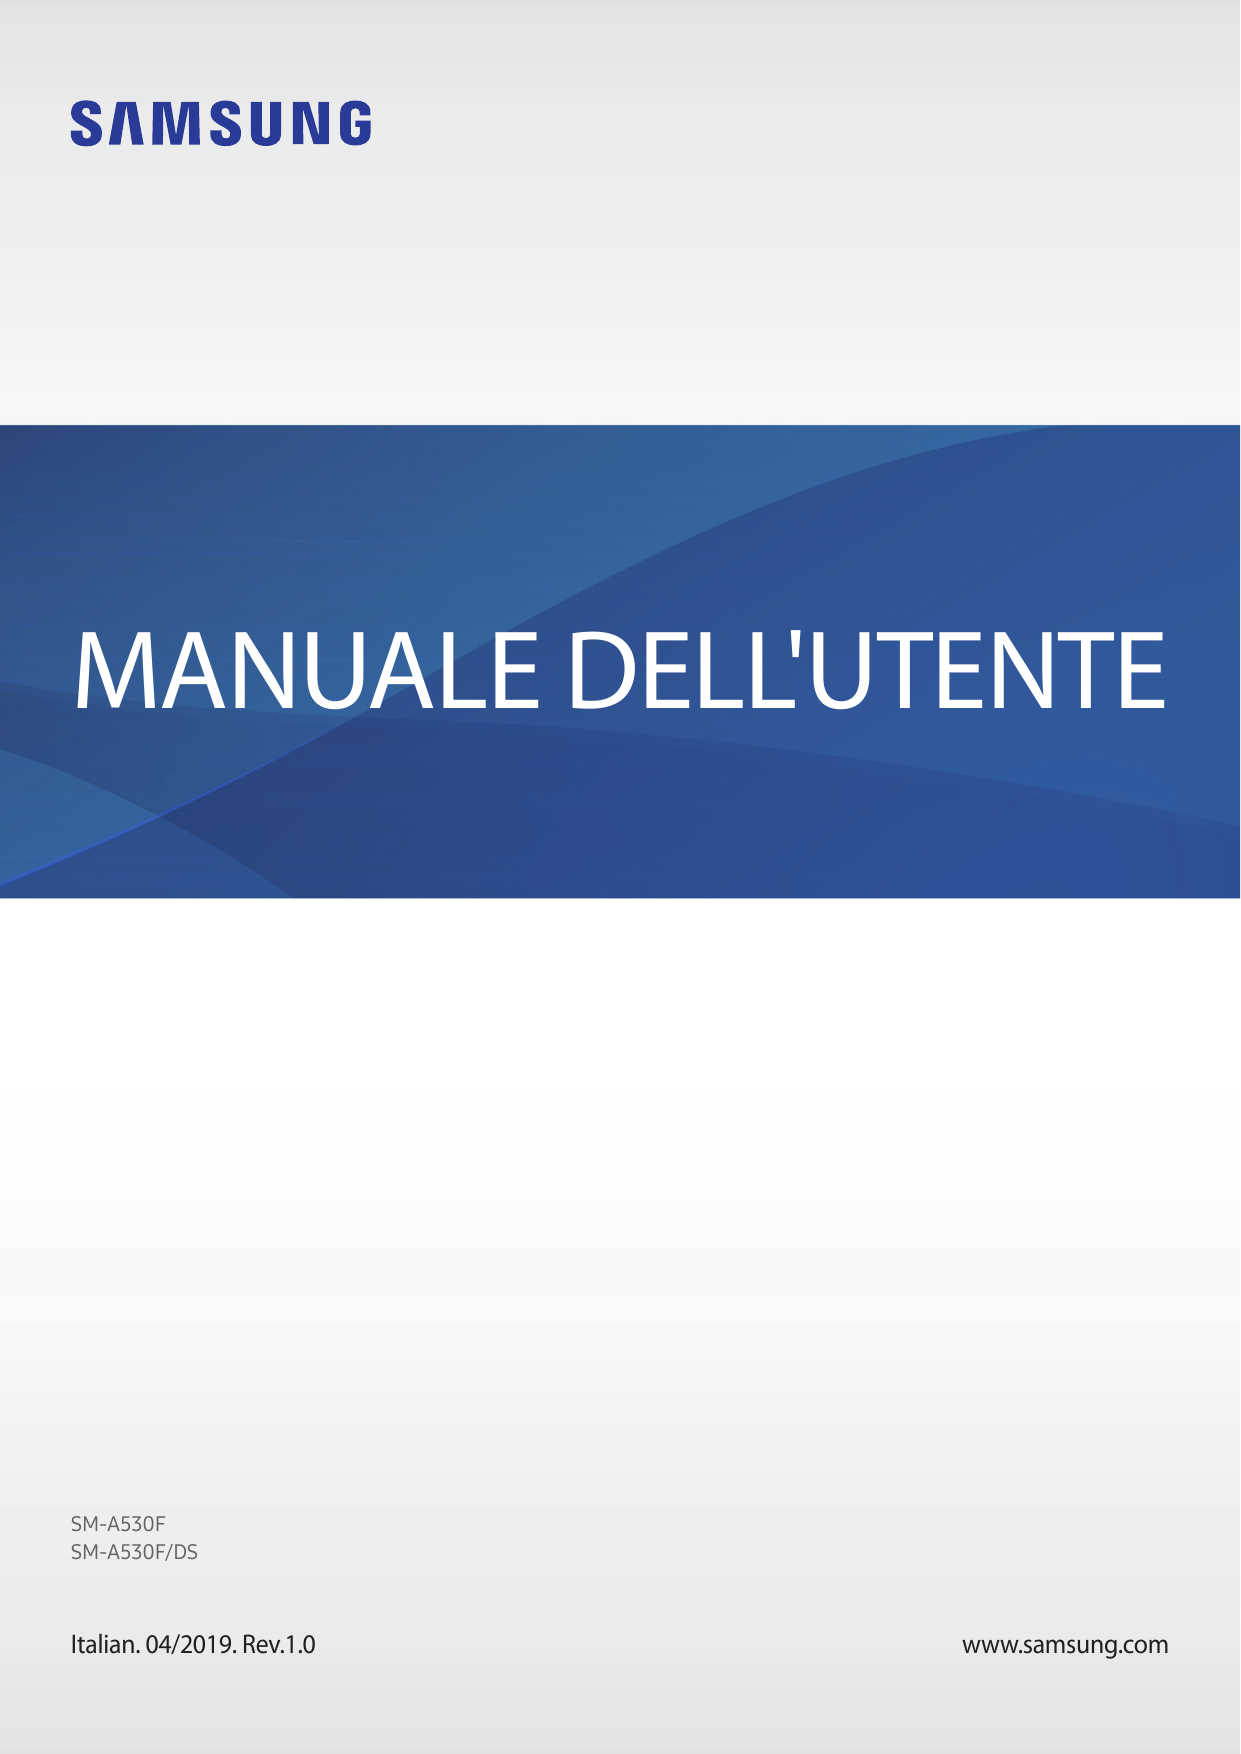 MANUALE DELL'UTENTESM-A530FSM-A530F/DSItalian. 04/2019. Rev.1.0www.samsung.com